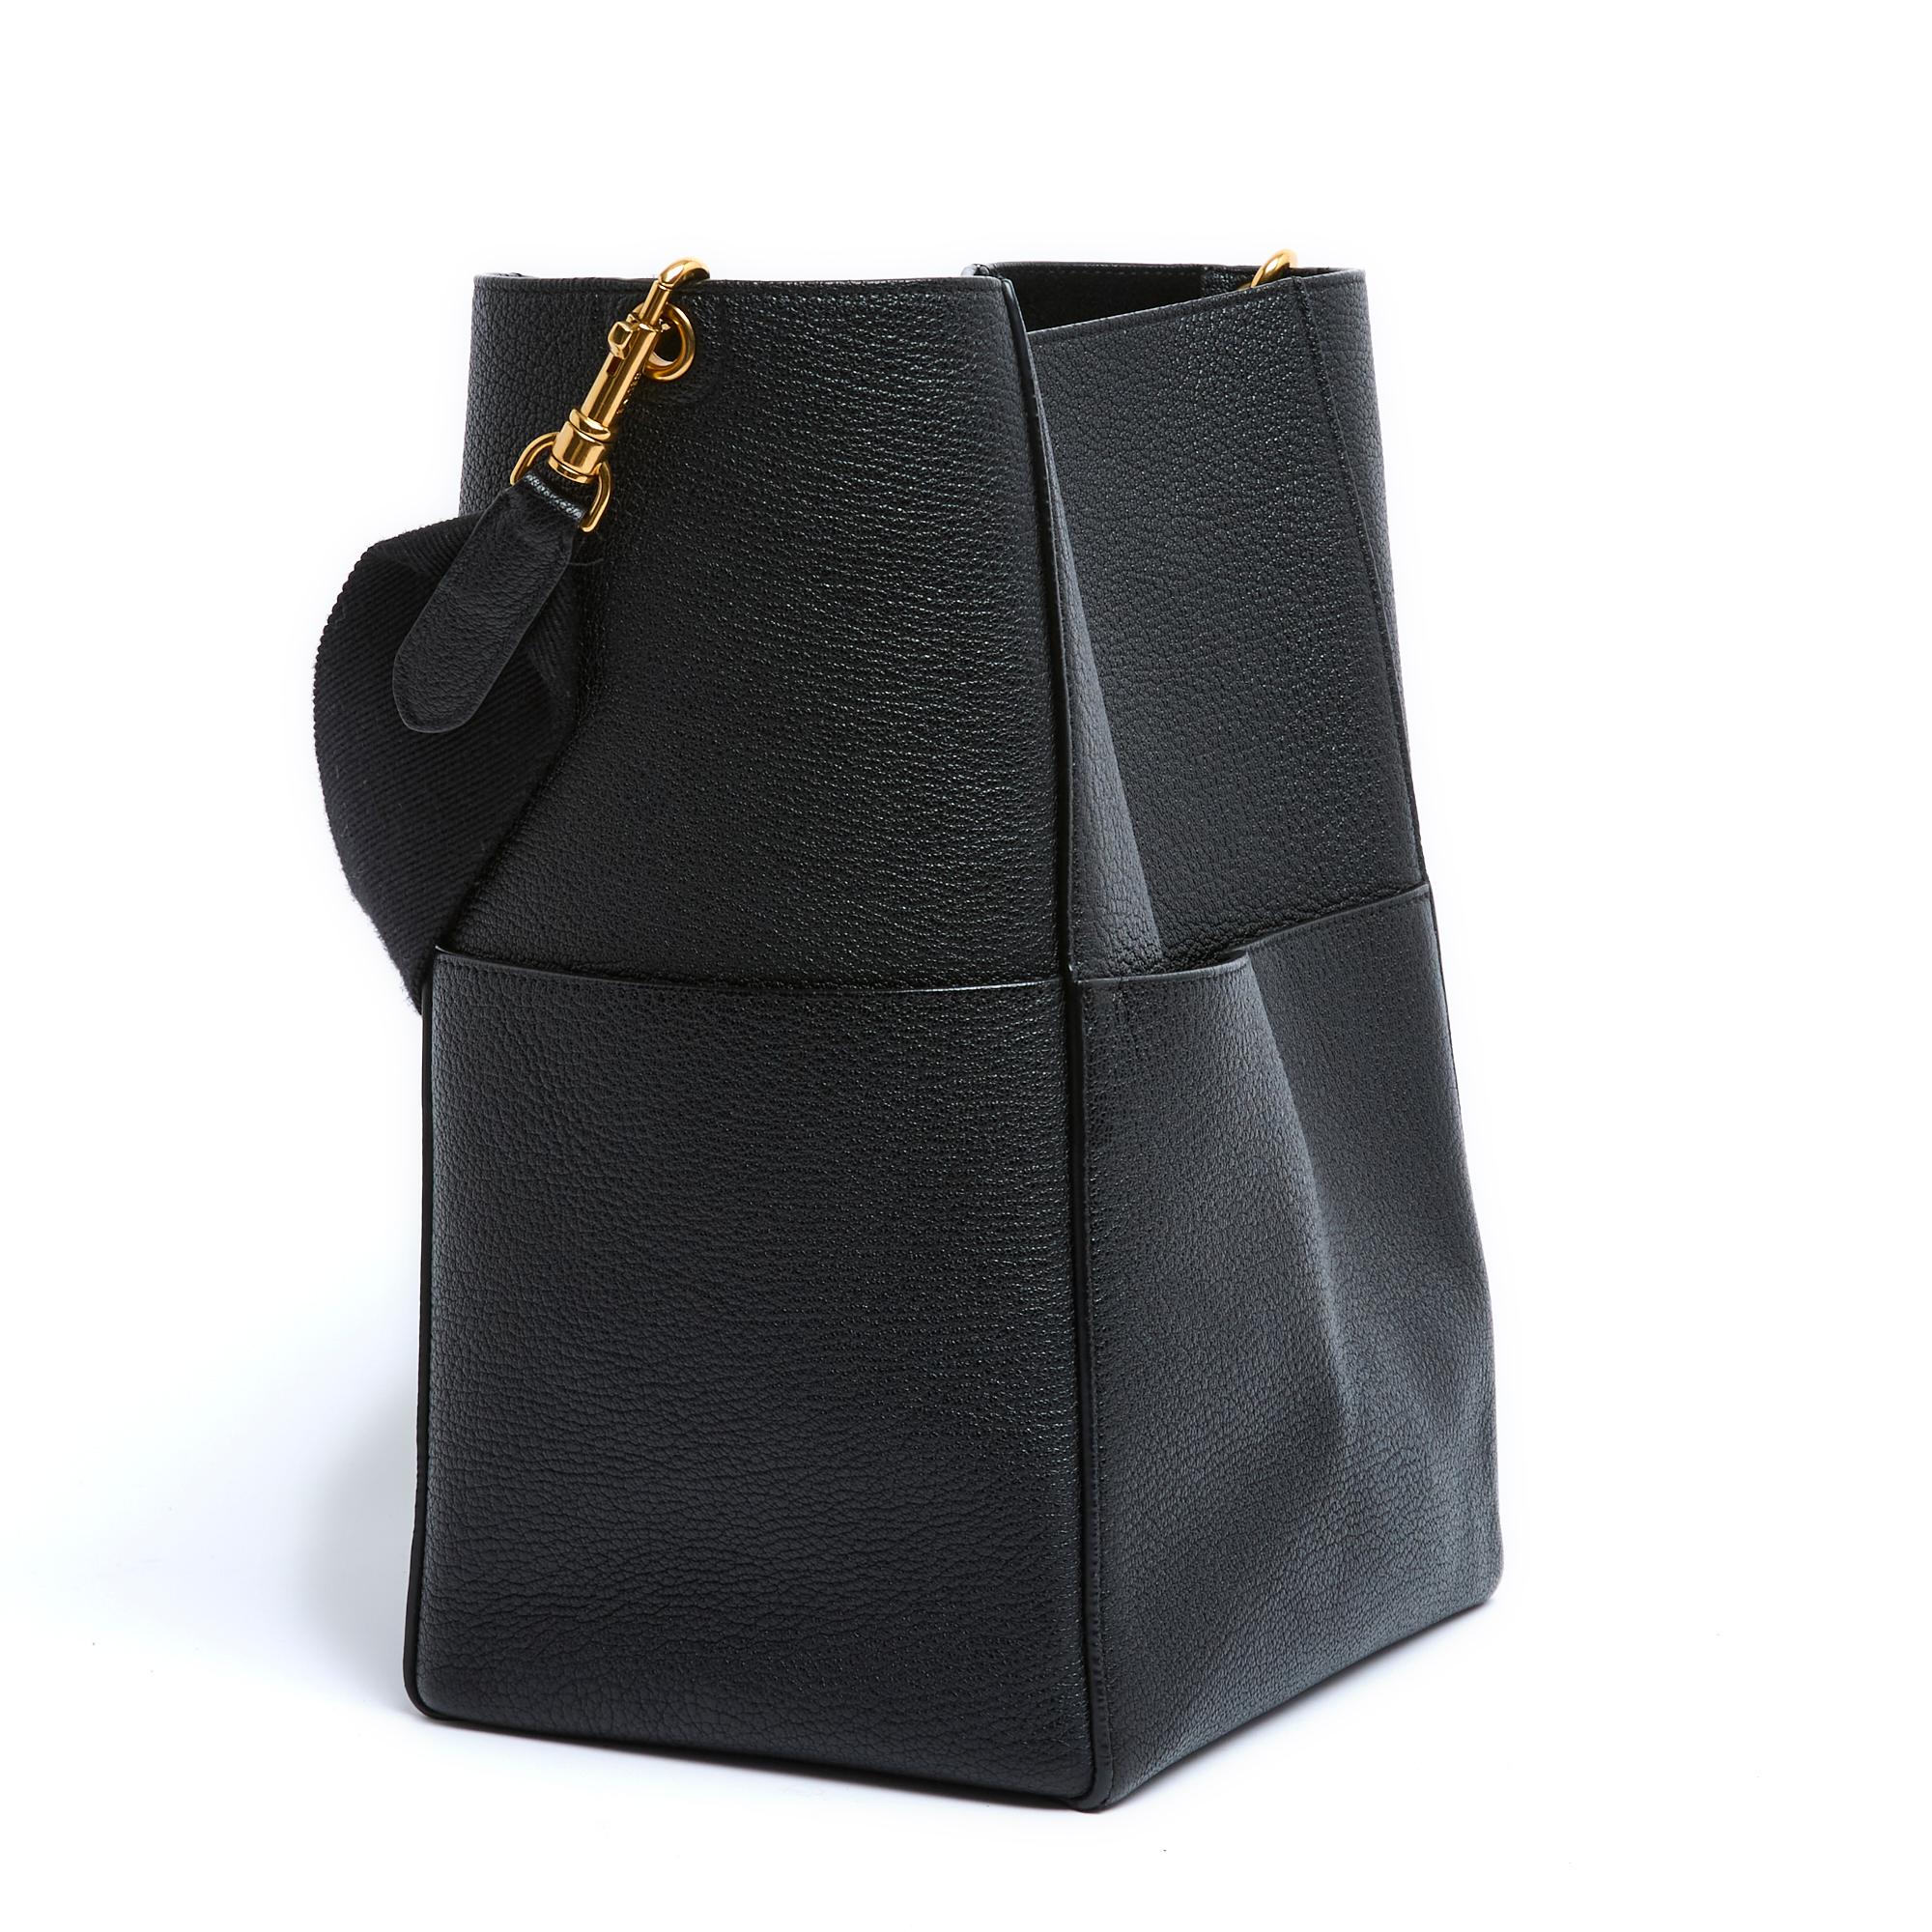 Women's or Men's Celine Sac Seau Sangle Black Bucket Bag by Phoebe Philo